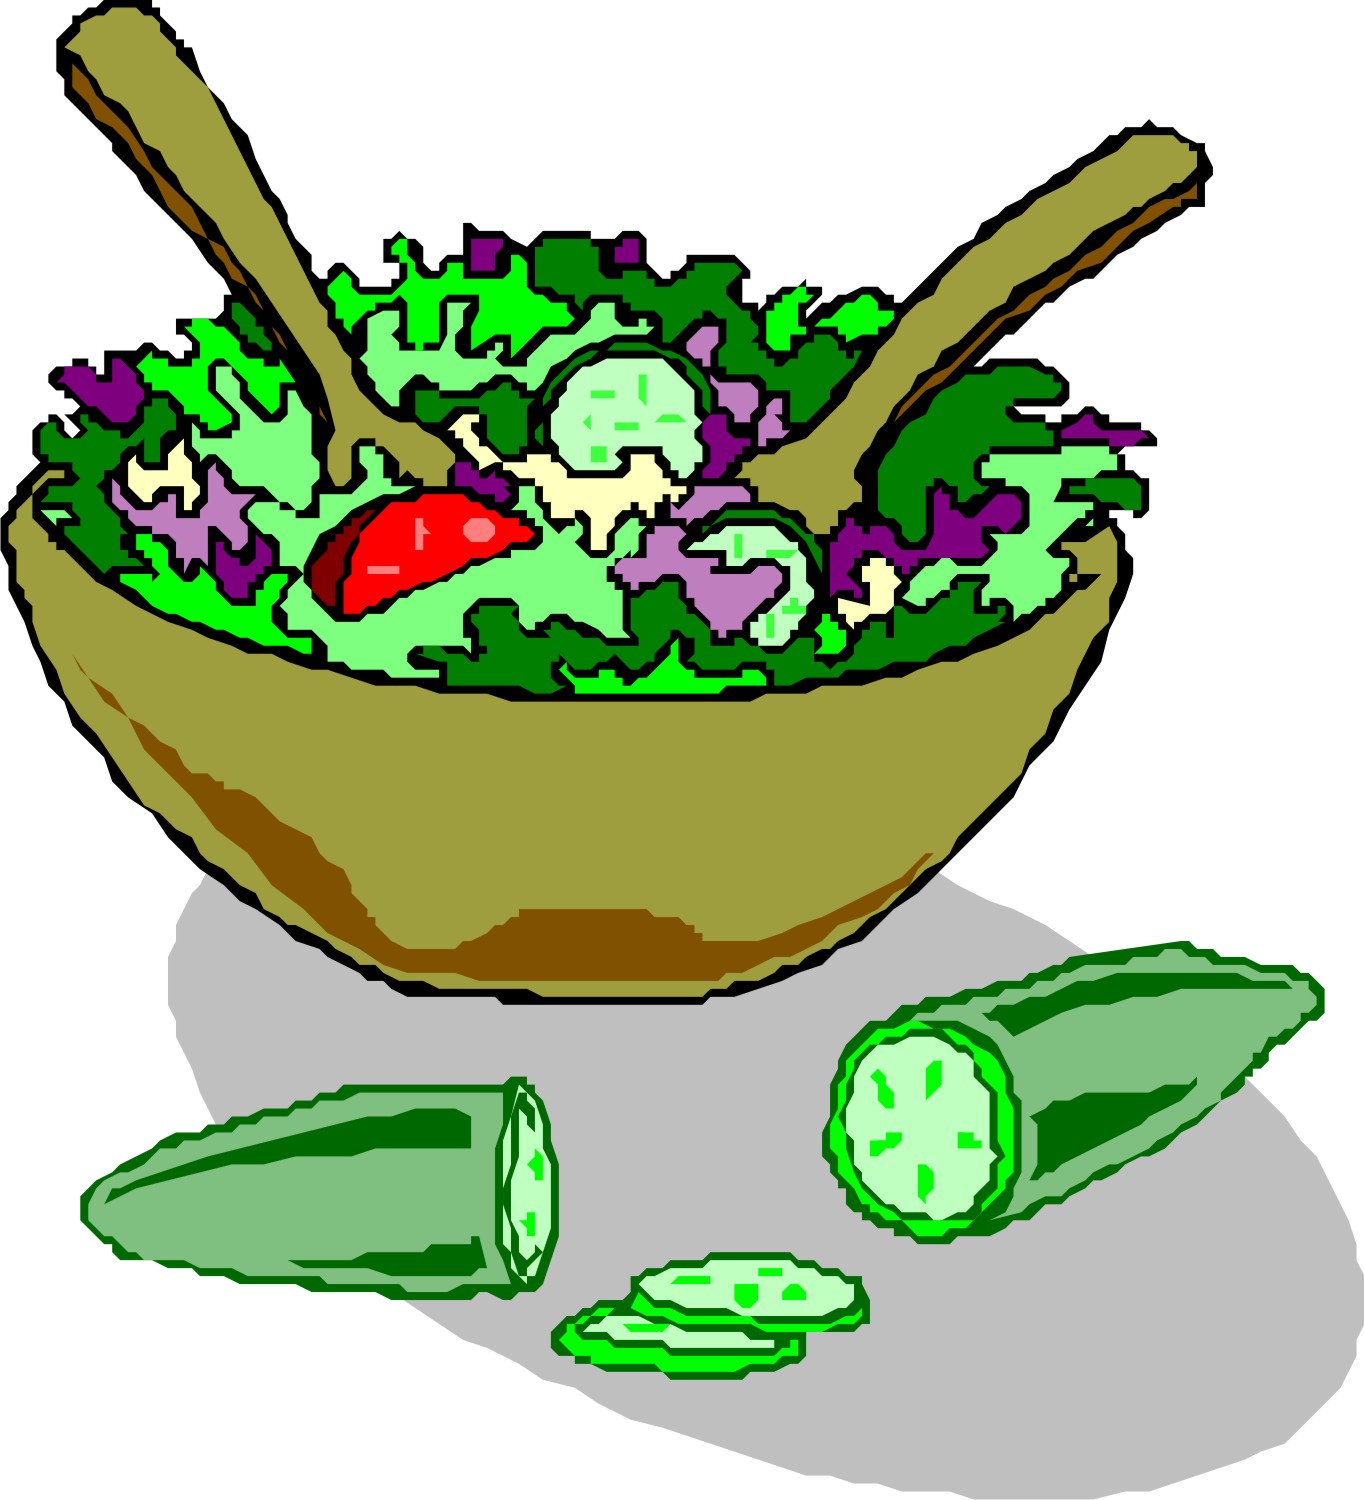 Salad bar clipart free image 3 